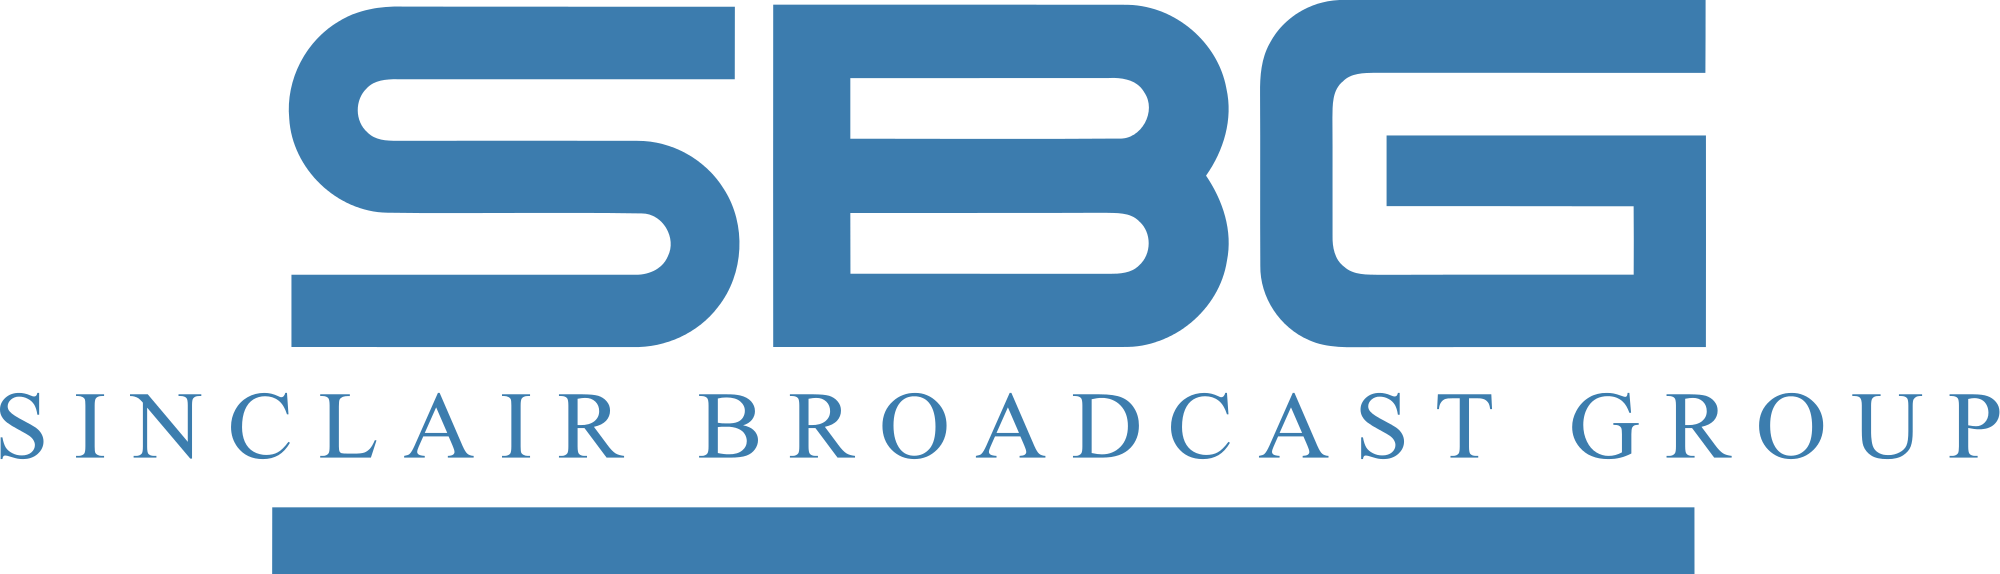 Sinclair broadcast group logo.svg